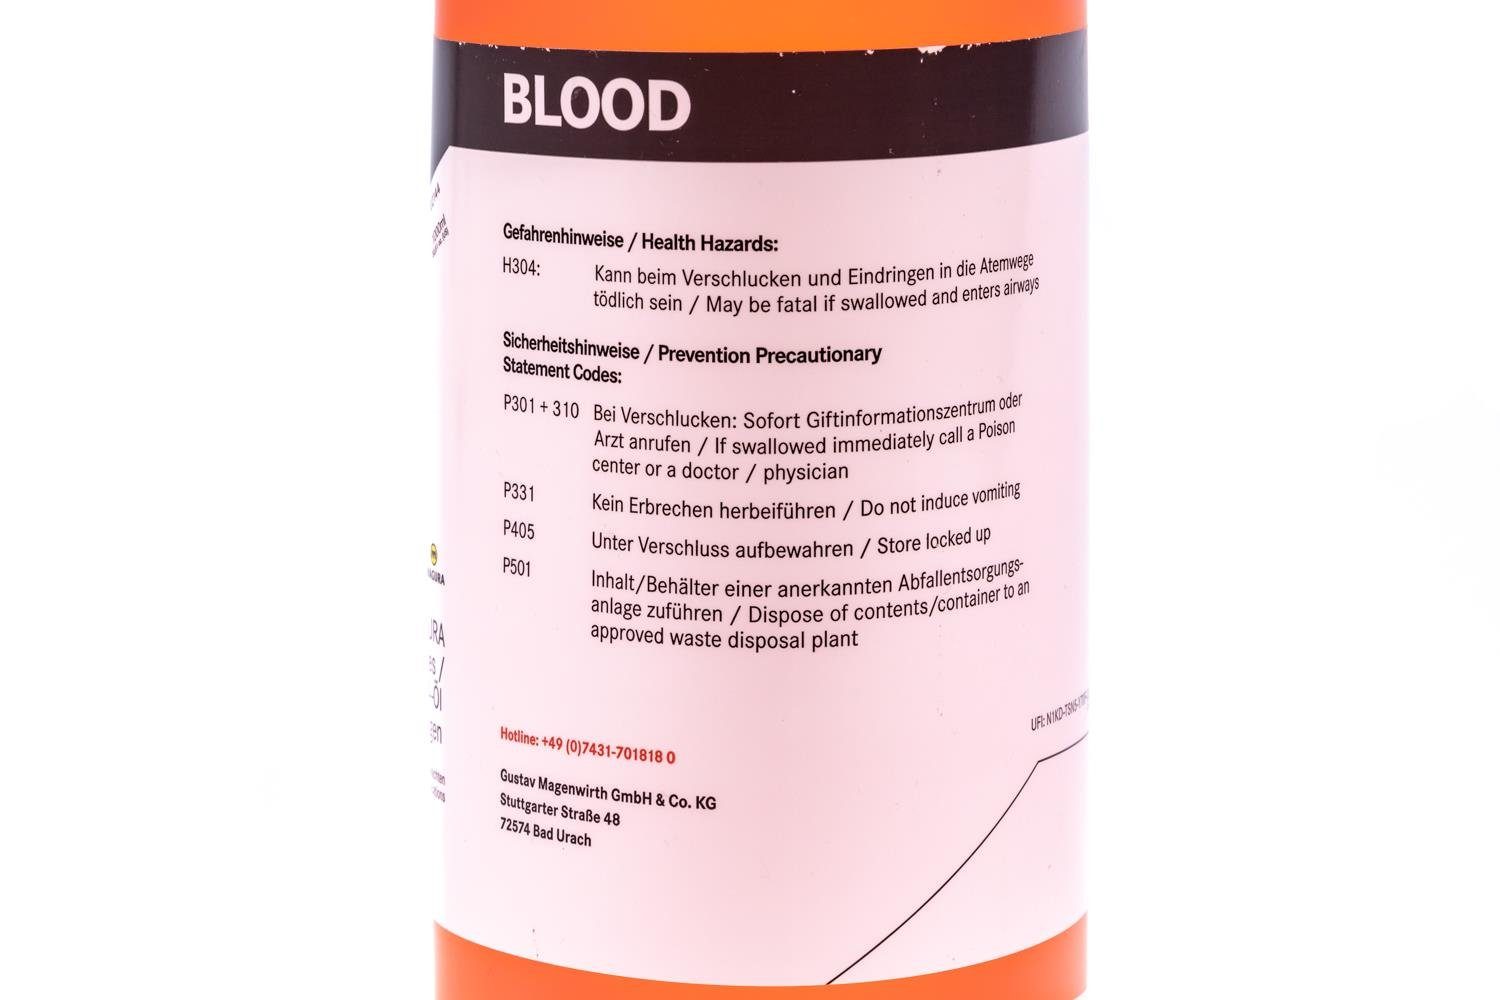 Bio-Hydraulik Blood 1000ml Magura Kupplung Felgenbremse Öl oil Öl ROT clutch Magura fluid